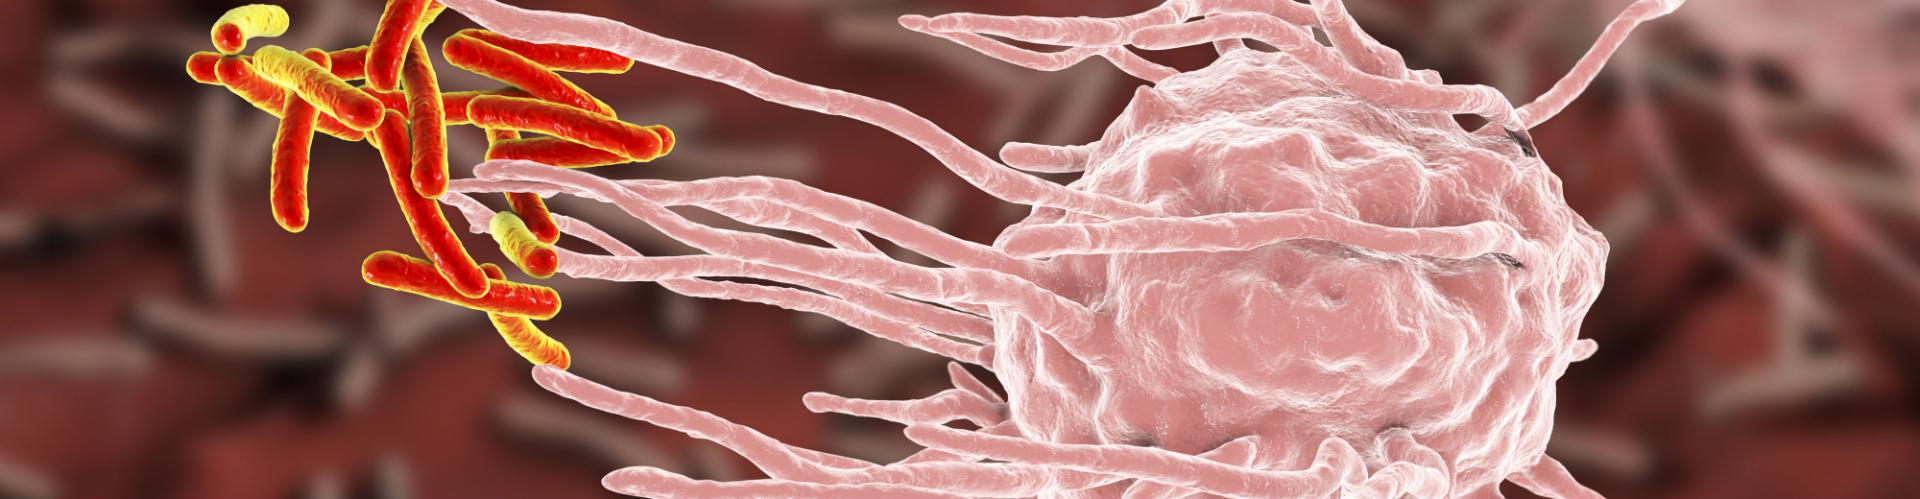 Macrophage englufing tuberculosis